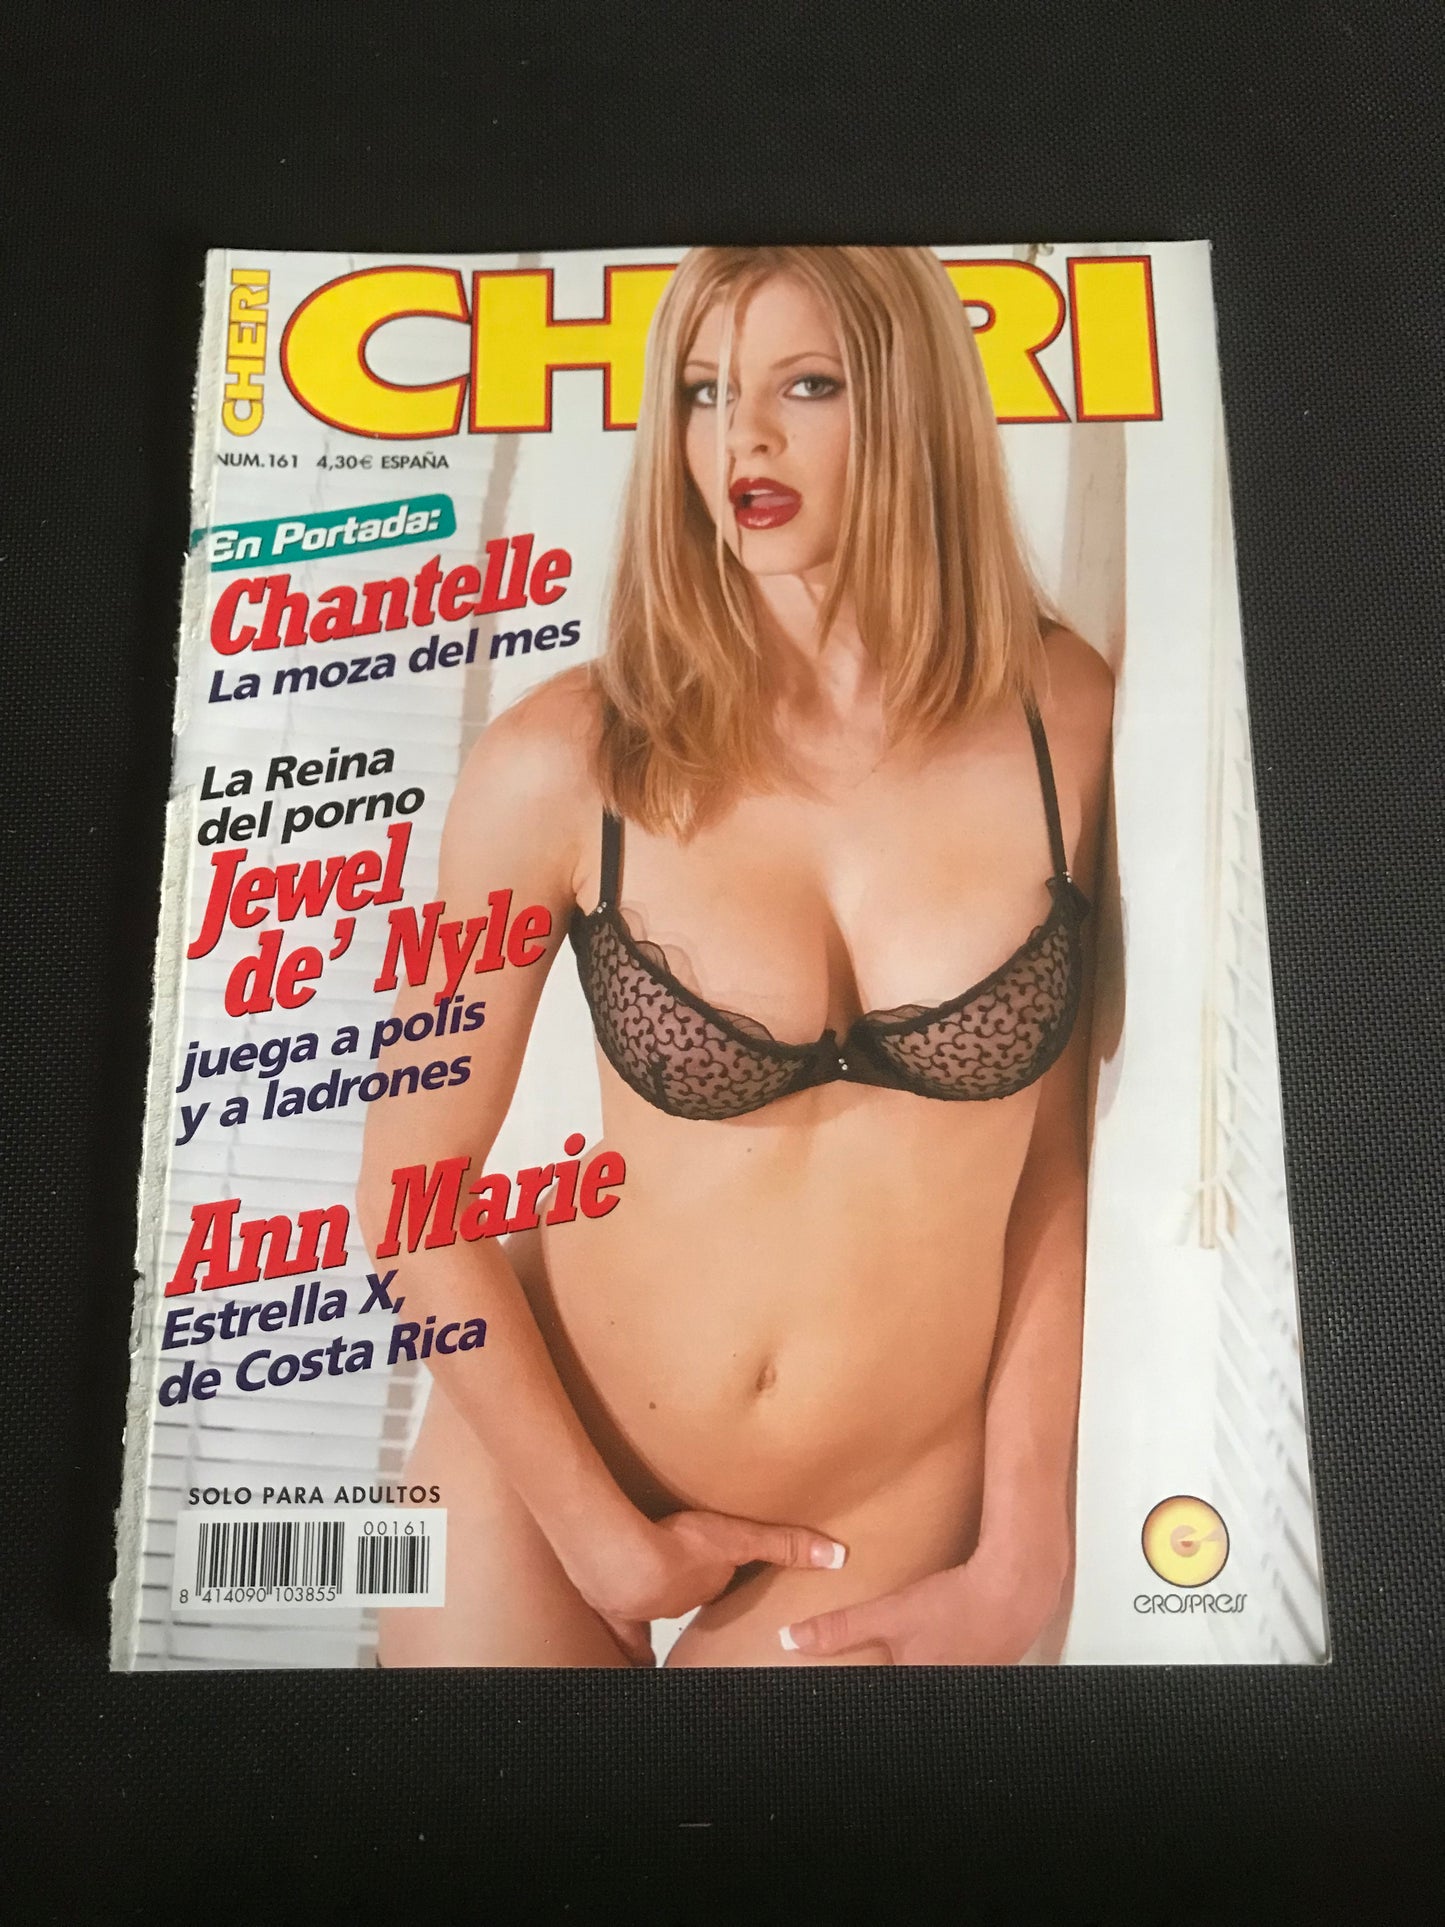 Cheri Spanish Edition No 161